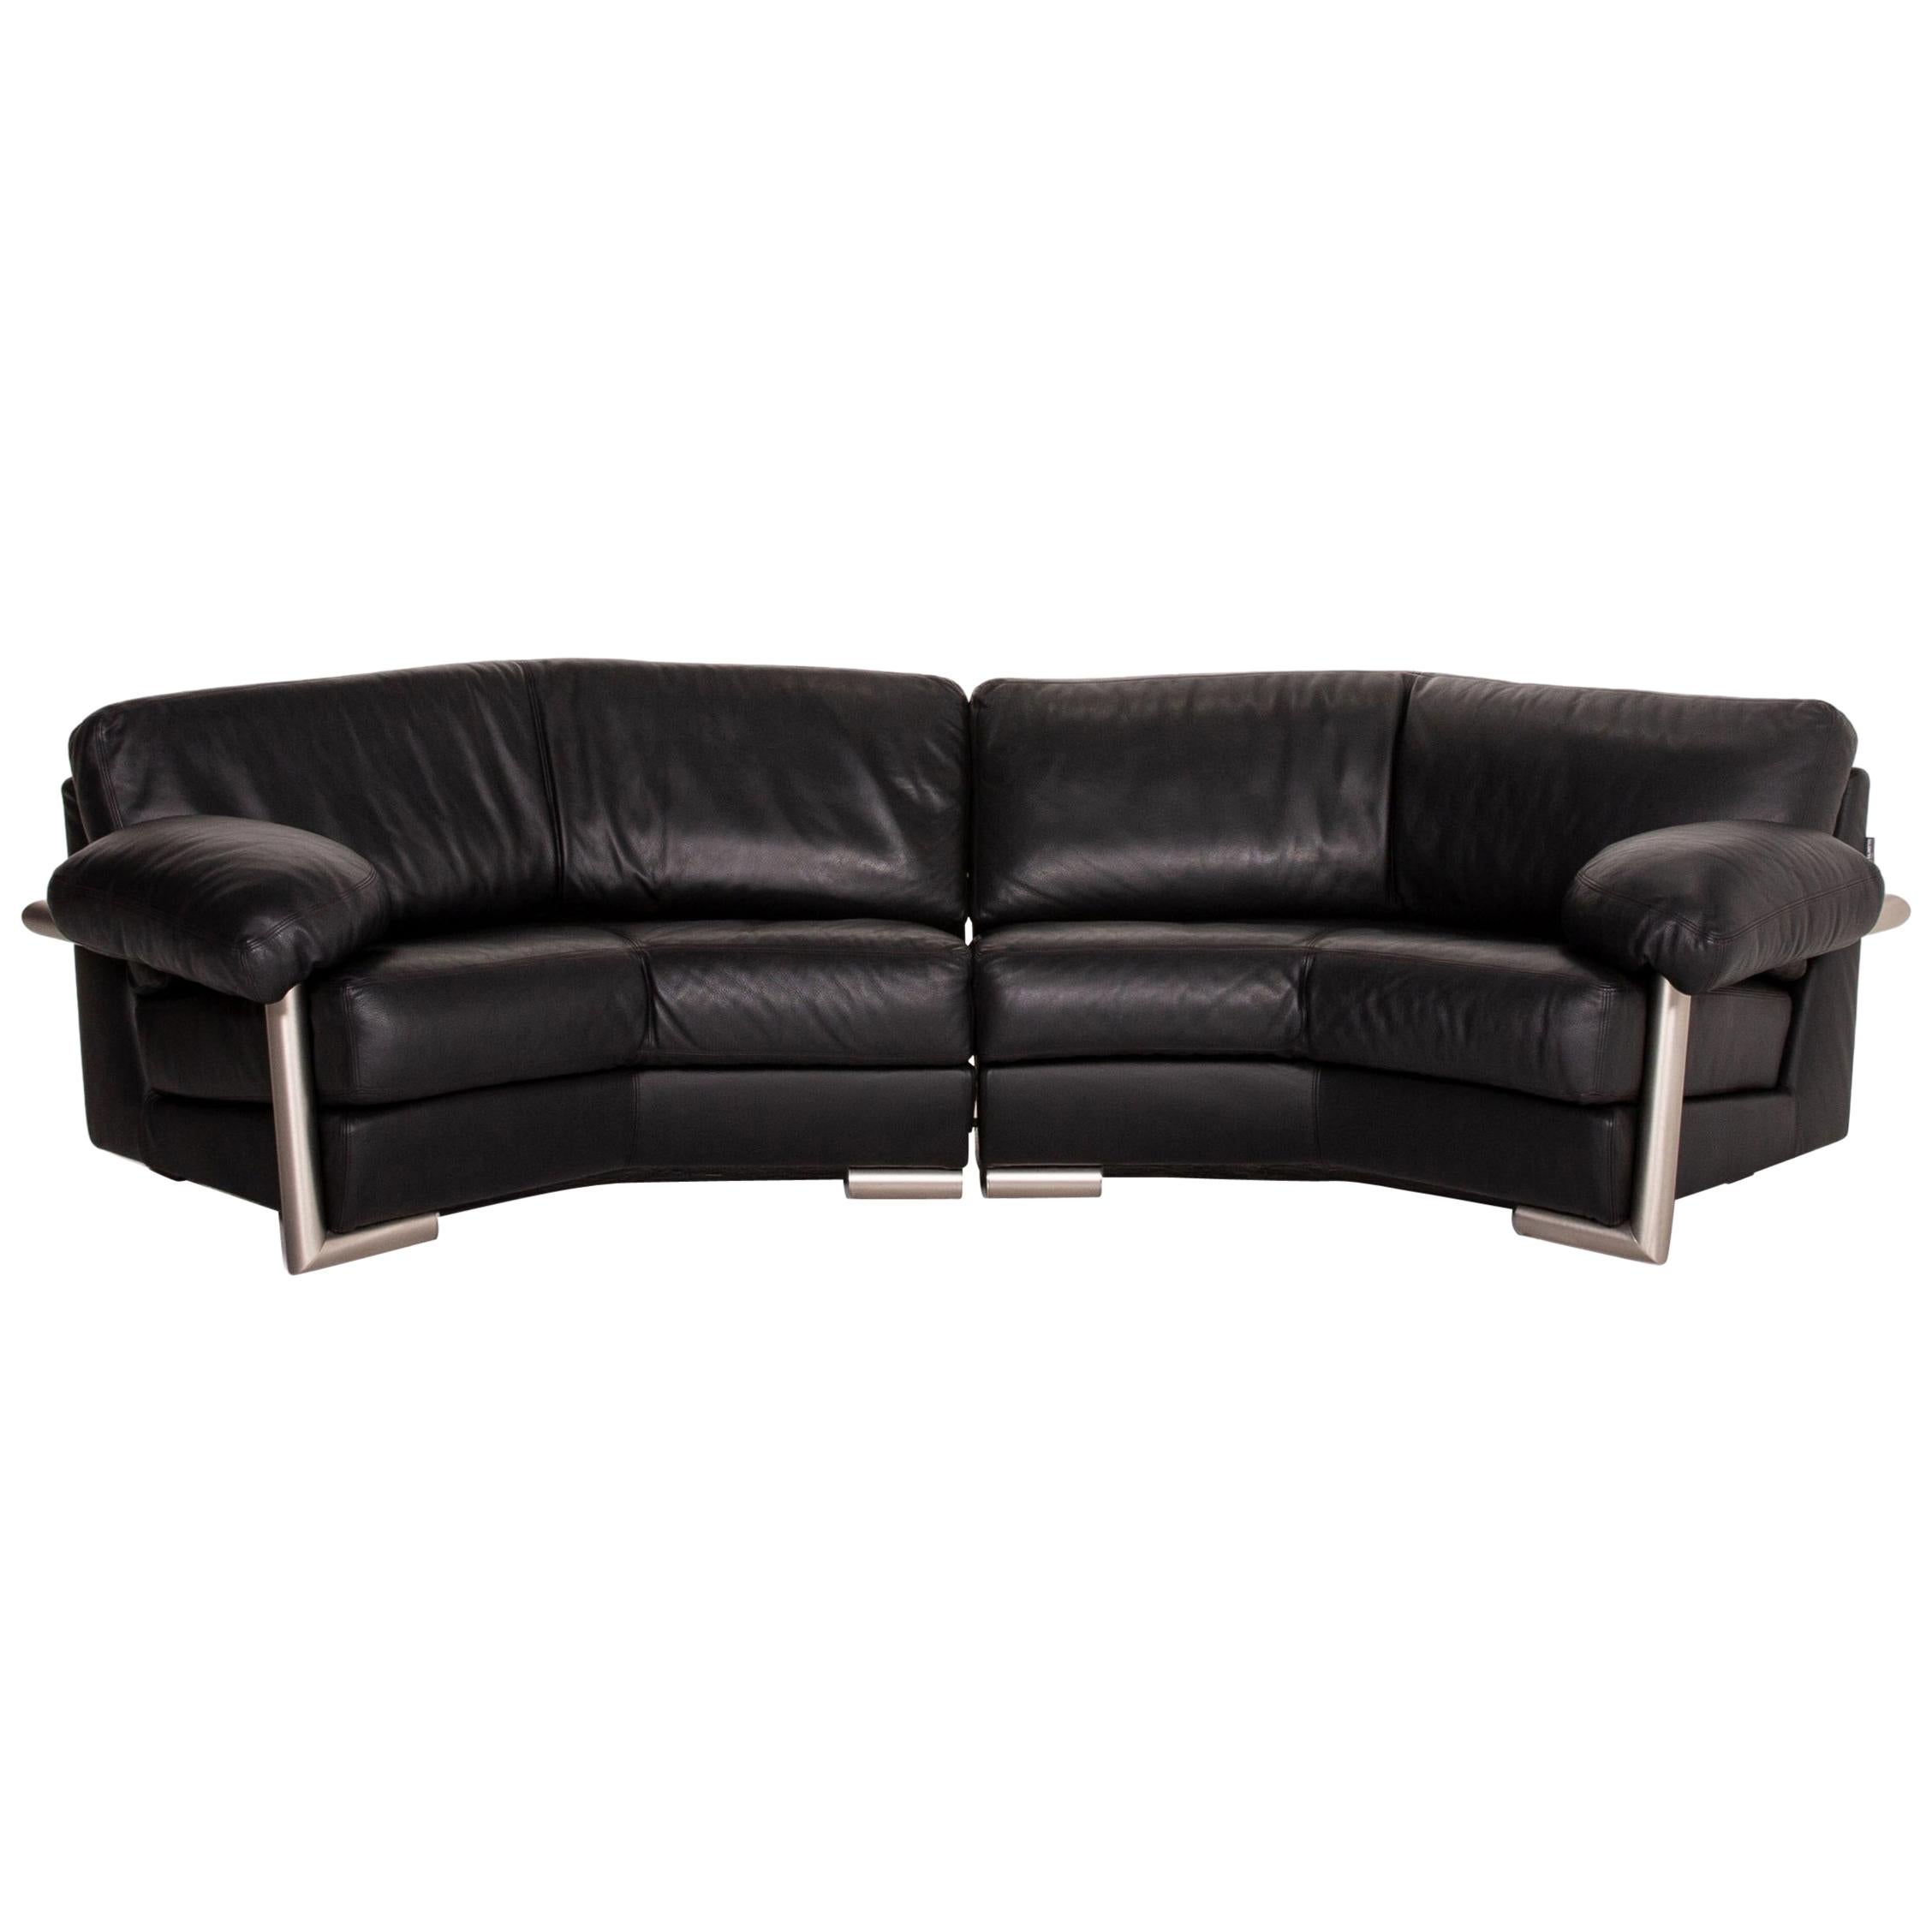 Artanova Medea Leather Corner Sofa Black Sofa Couch Michael C. Brandis